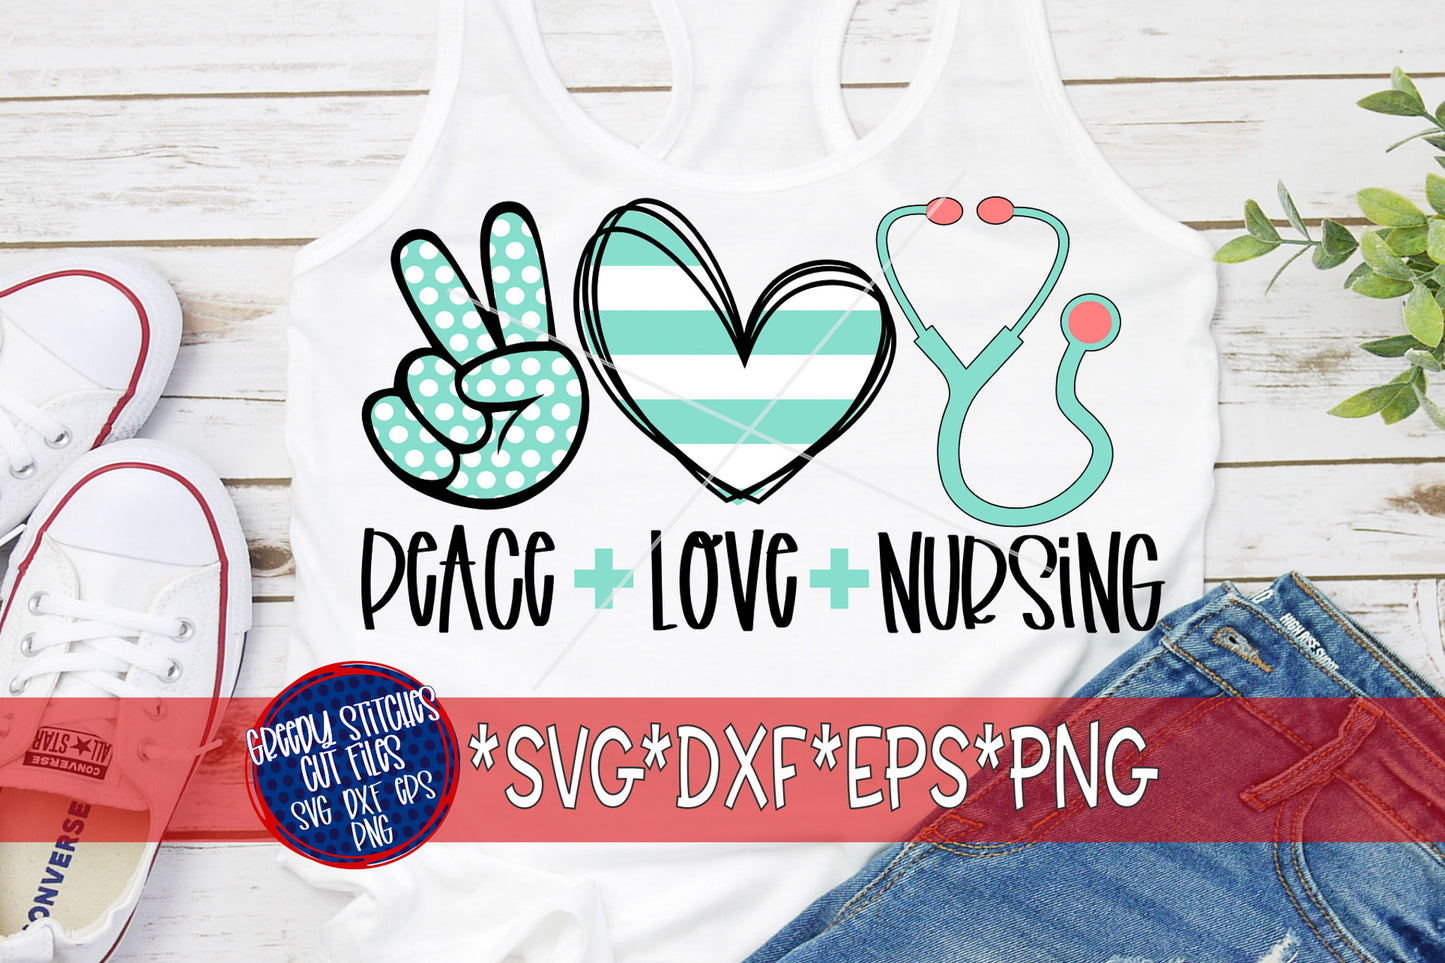 Nurse SvG | Peace Love Nurse svg dxf eps png. Nursing SVG | Nurse SVG | Peace Loce Nursing SvG | Nurse DxF | Nursing DxF | Instant Download